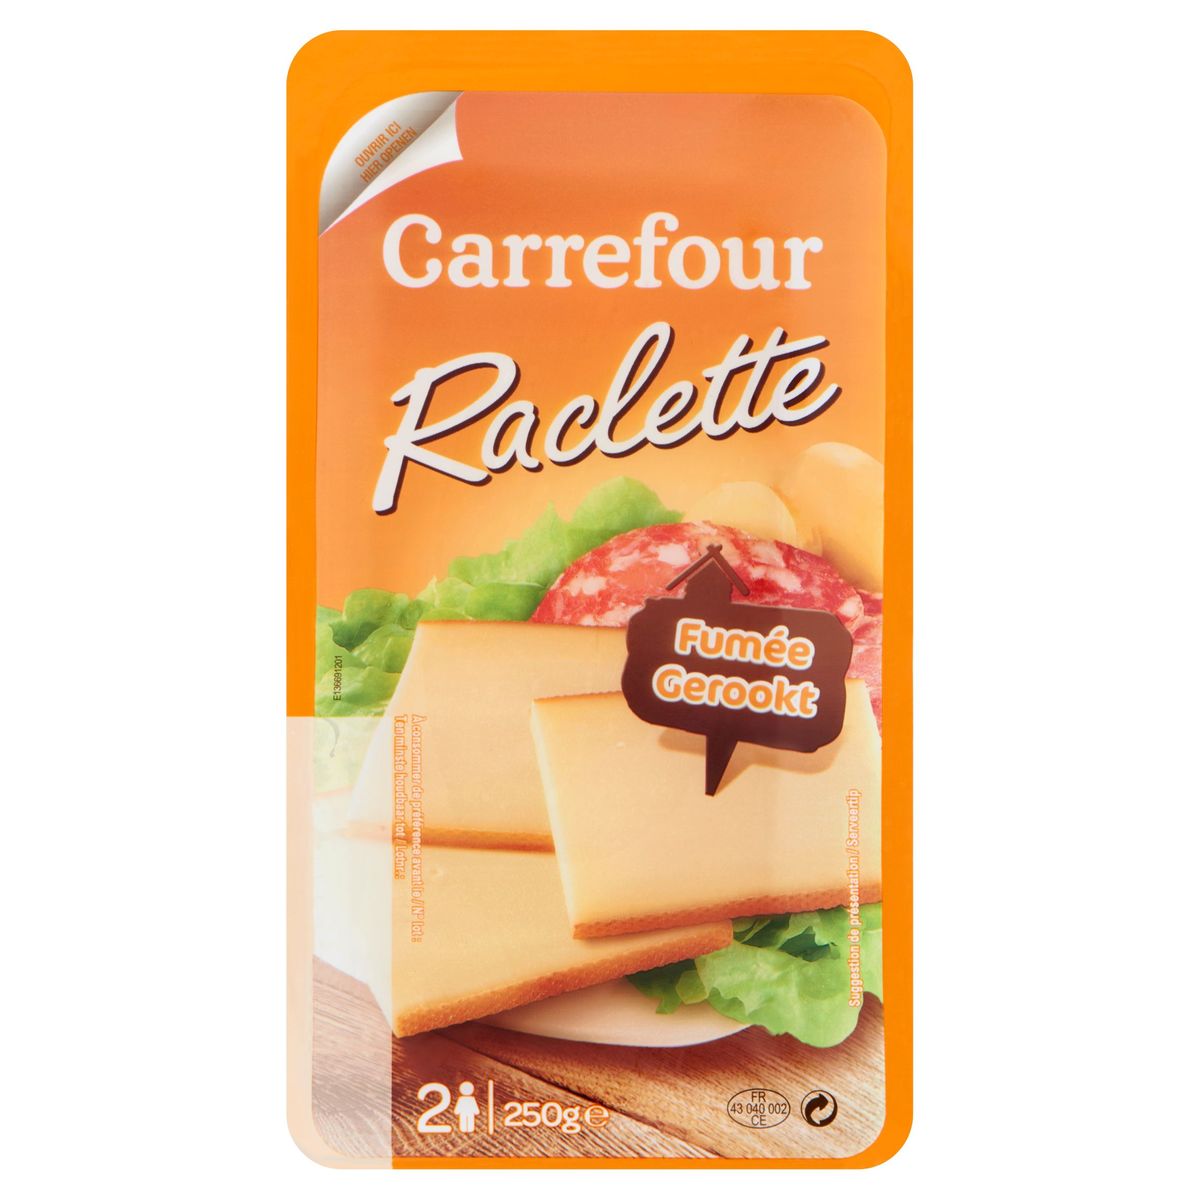 Carrefour Raclette Gerookt 250 g